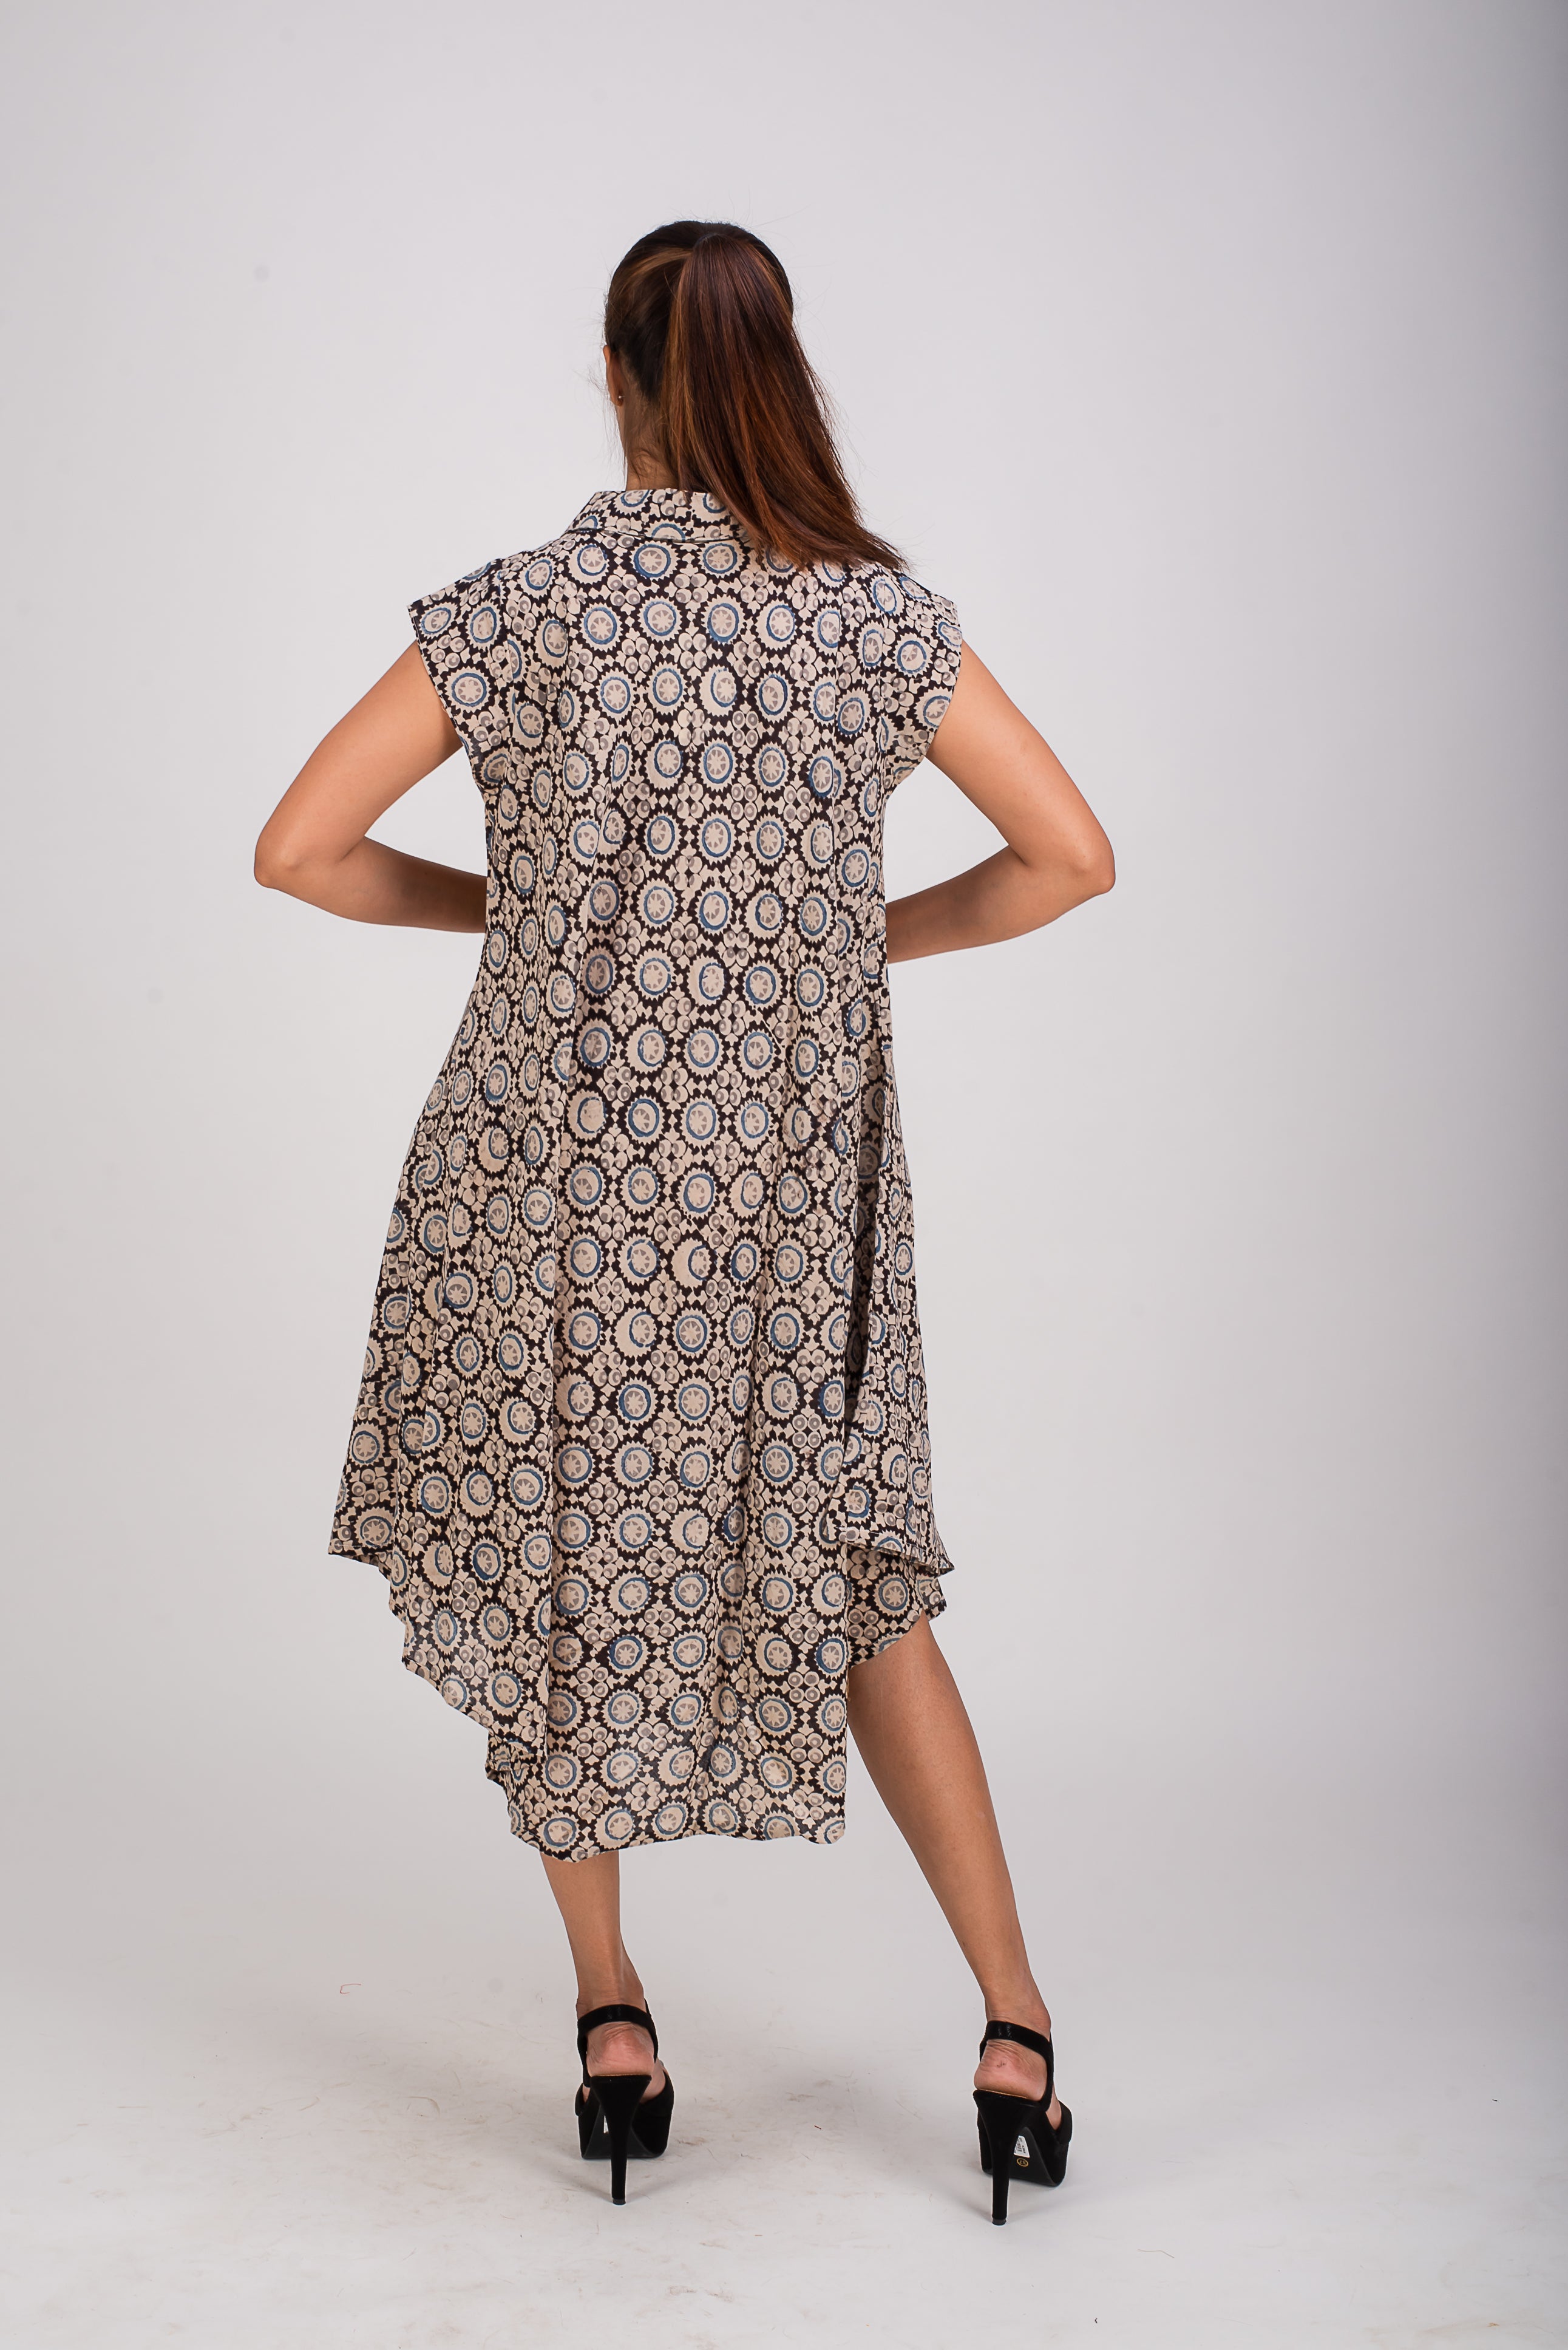 586-137 "New York" Women's Samosa Dress